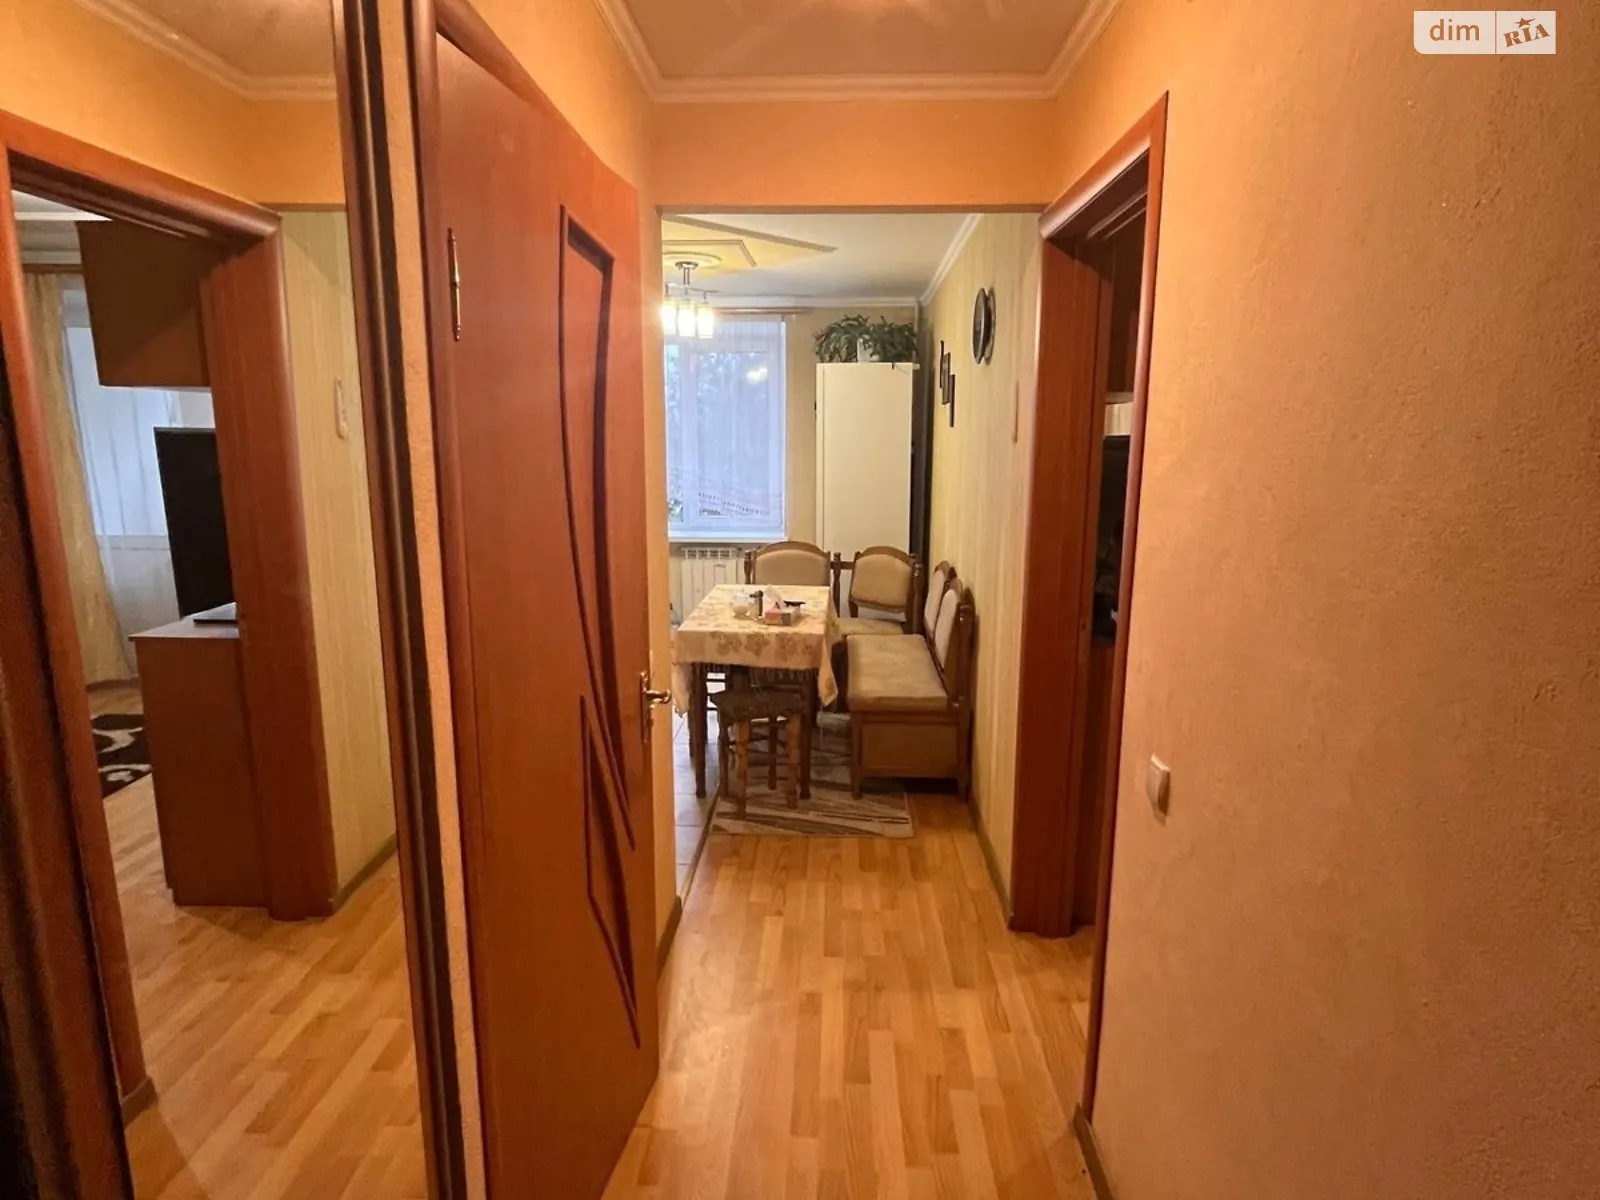 Сдается в аренду 1-комнатная квартира 35 кв. м в Ивано-Франковске, ул. Джохара Дудаева, 35 - фото 1